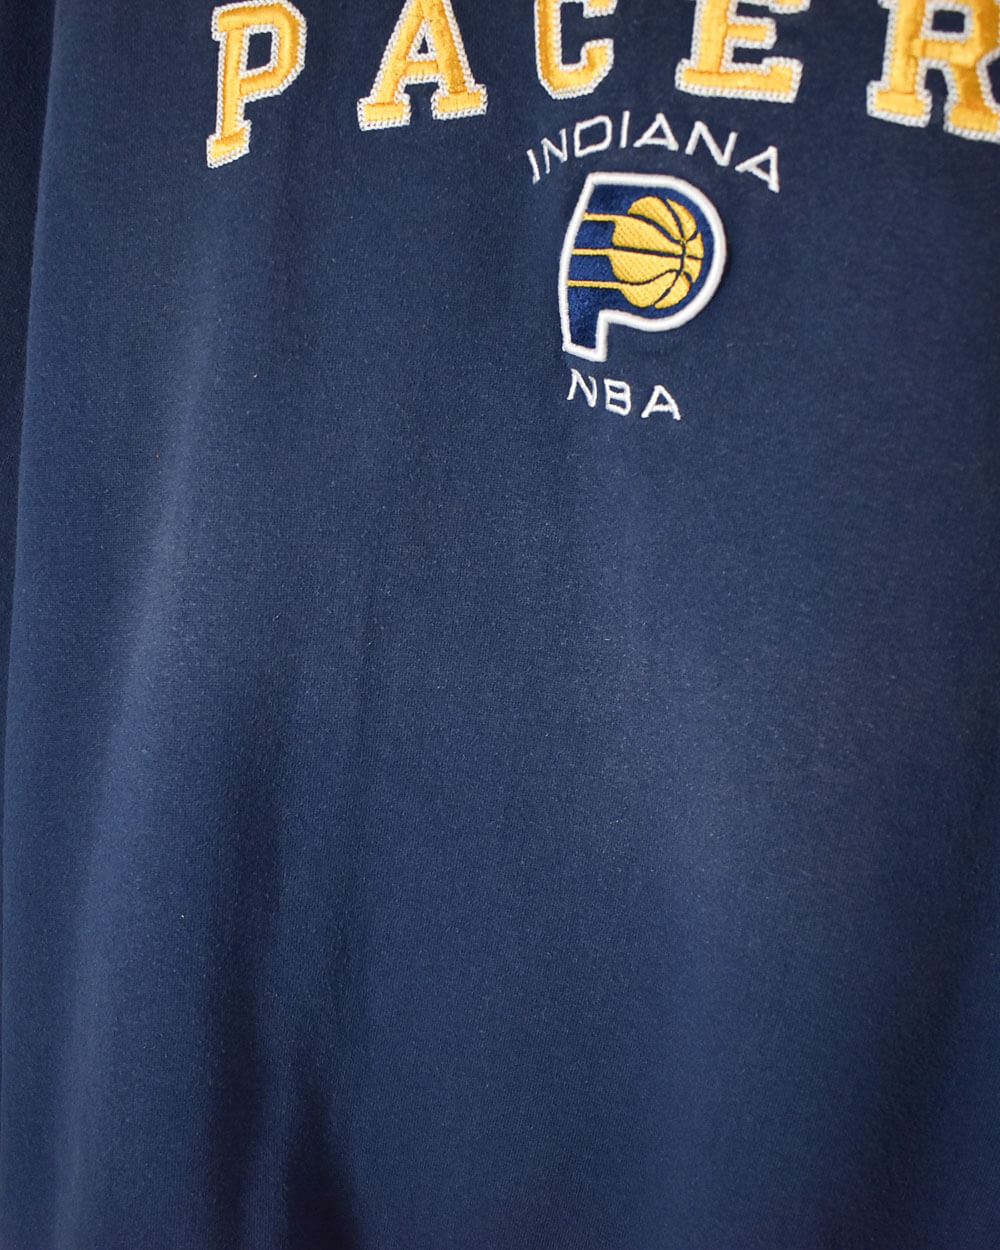 Navy Lee NBA Indiana Pacers Sweatshirt - X-Large